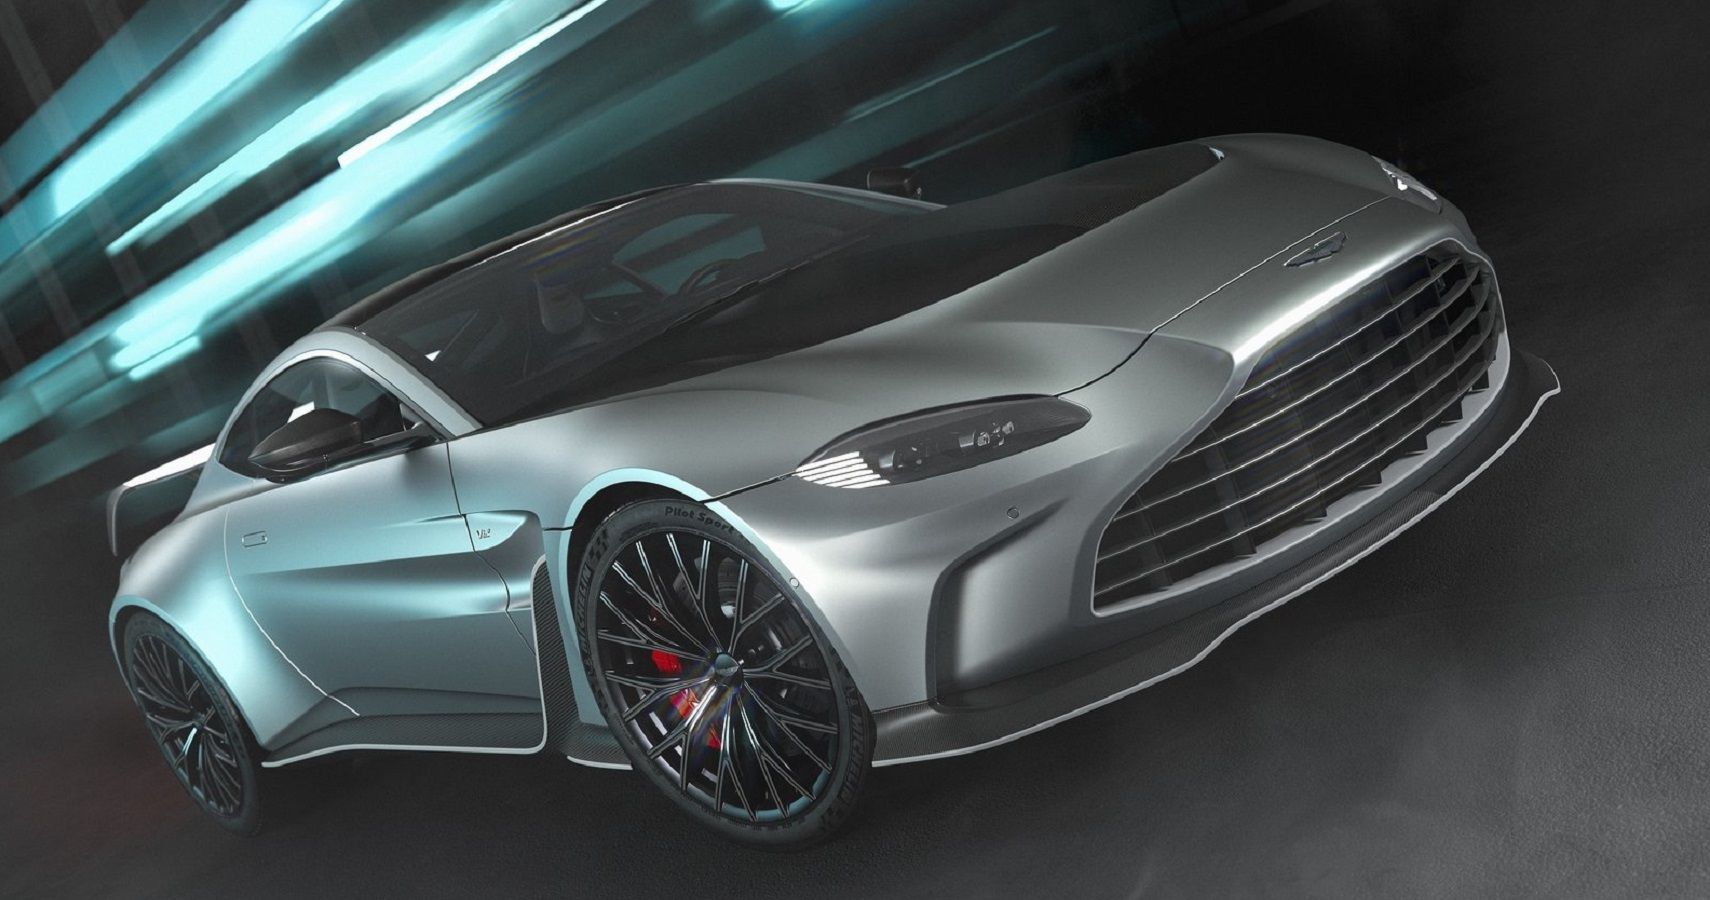 New Aston Martin Vantage V12 front third quarter cinematic view